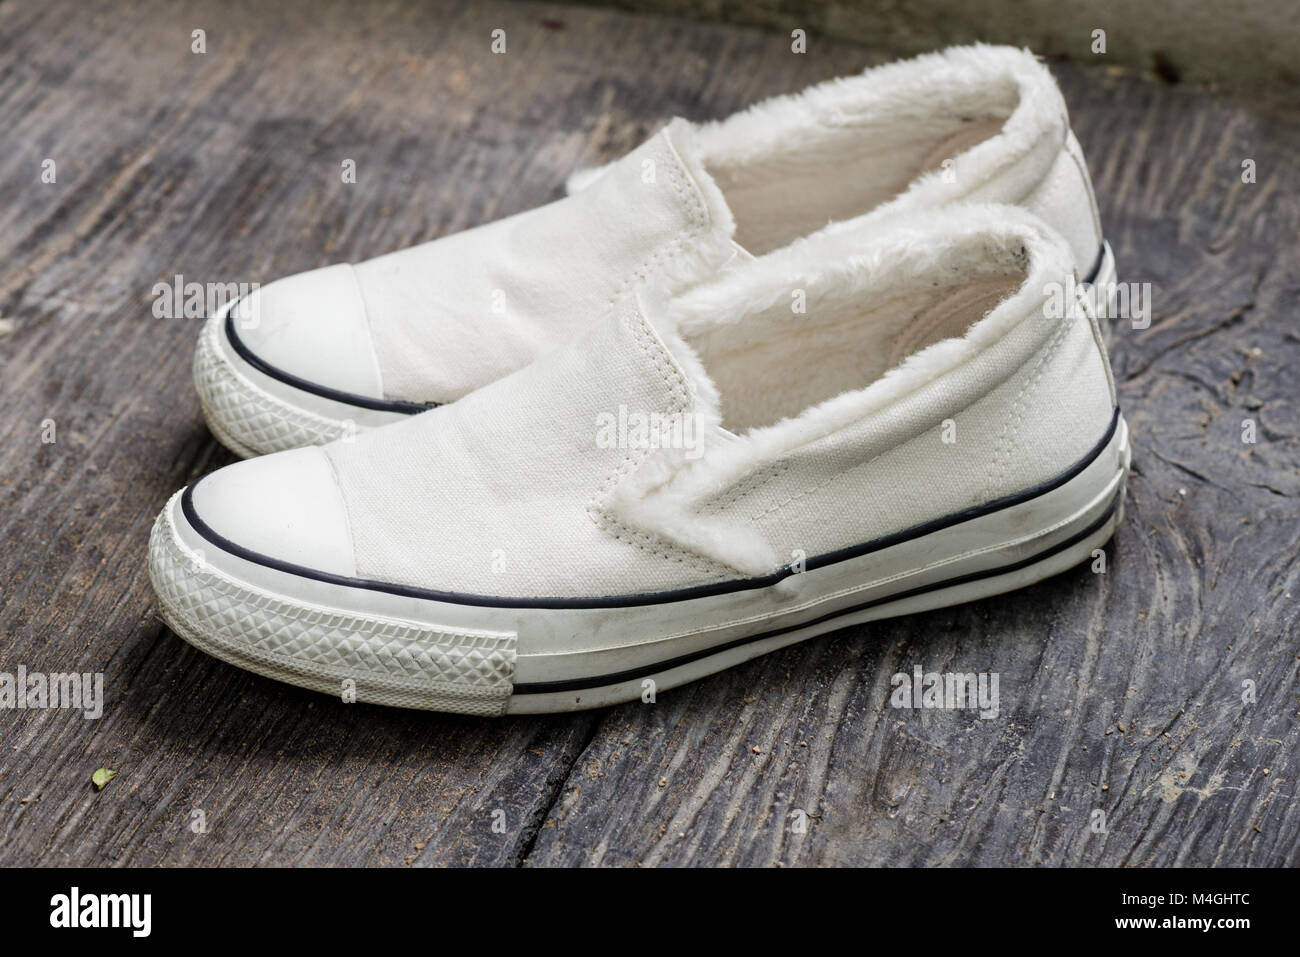 De velcro o slip on: siete zapatillas blancas sin cordones que